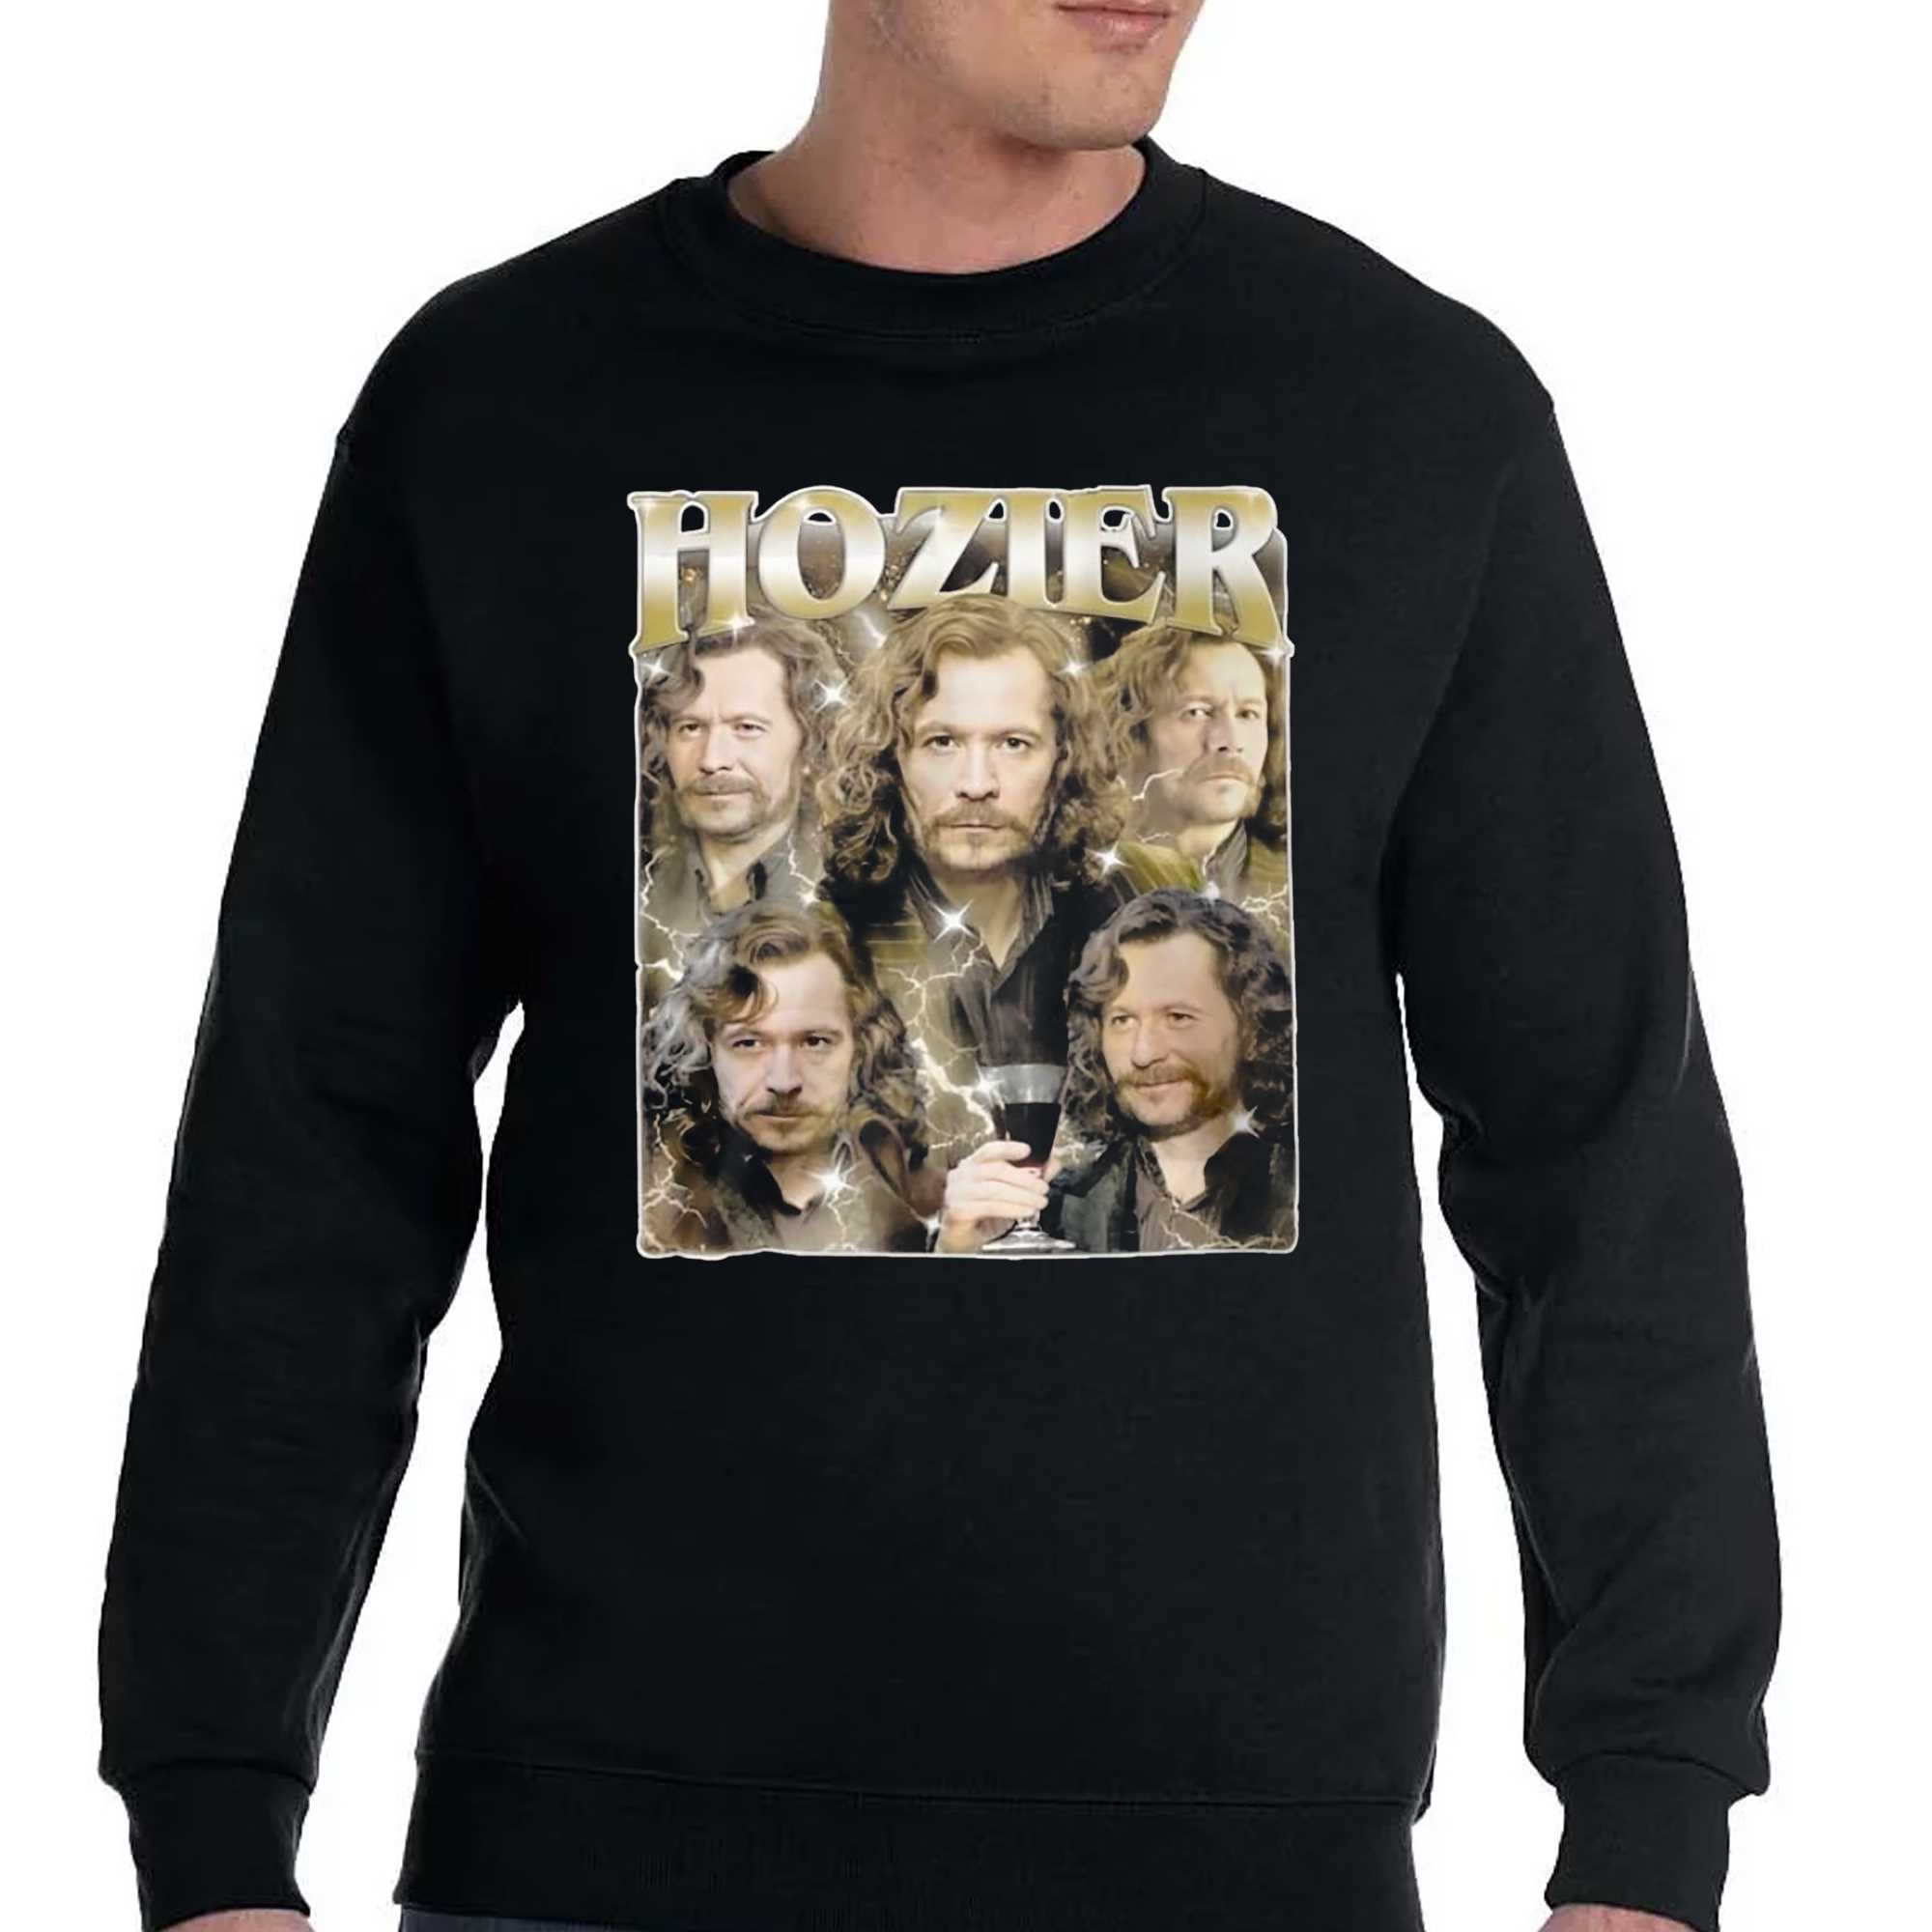 Hozier Vintage Shirt 